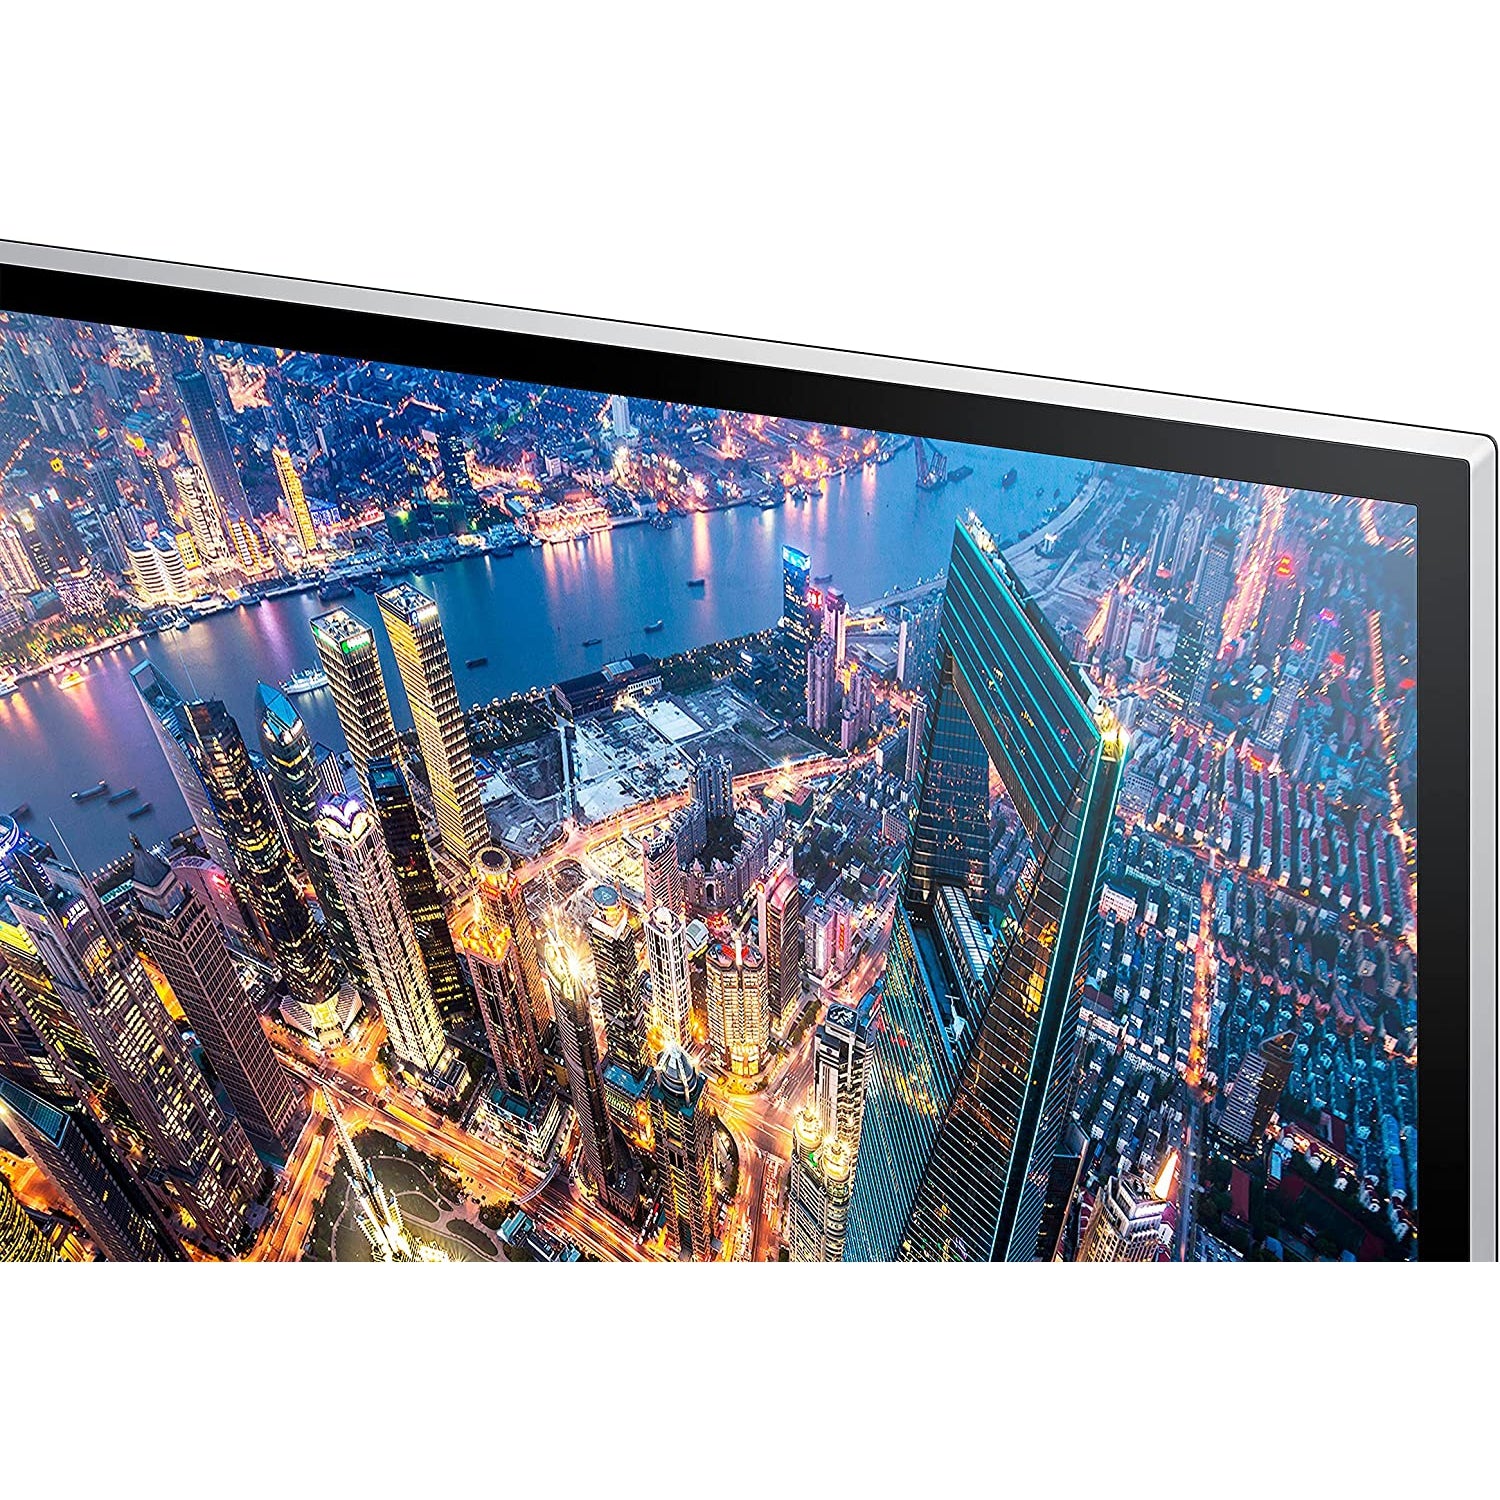 Samsung UE590 28'' UHD LED Monitor, Black (U28E590DSL)